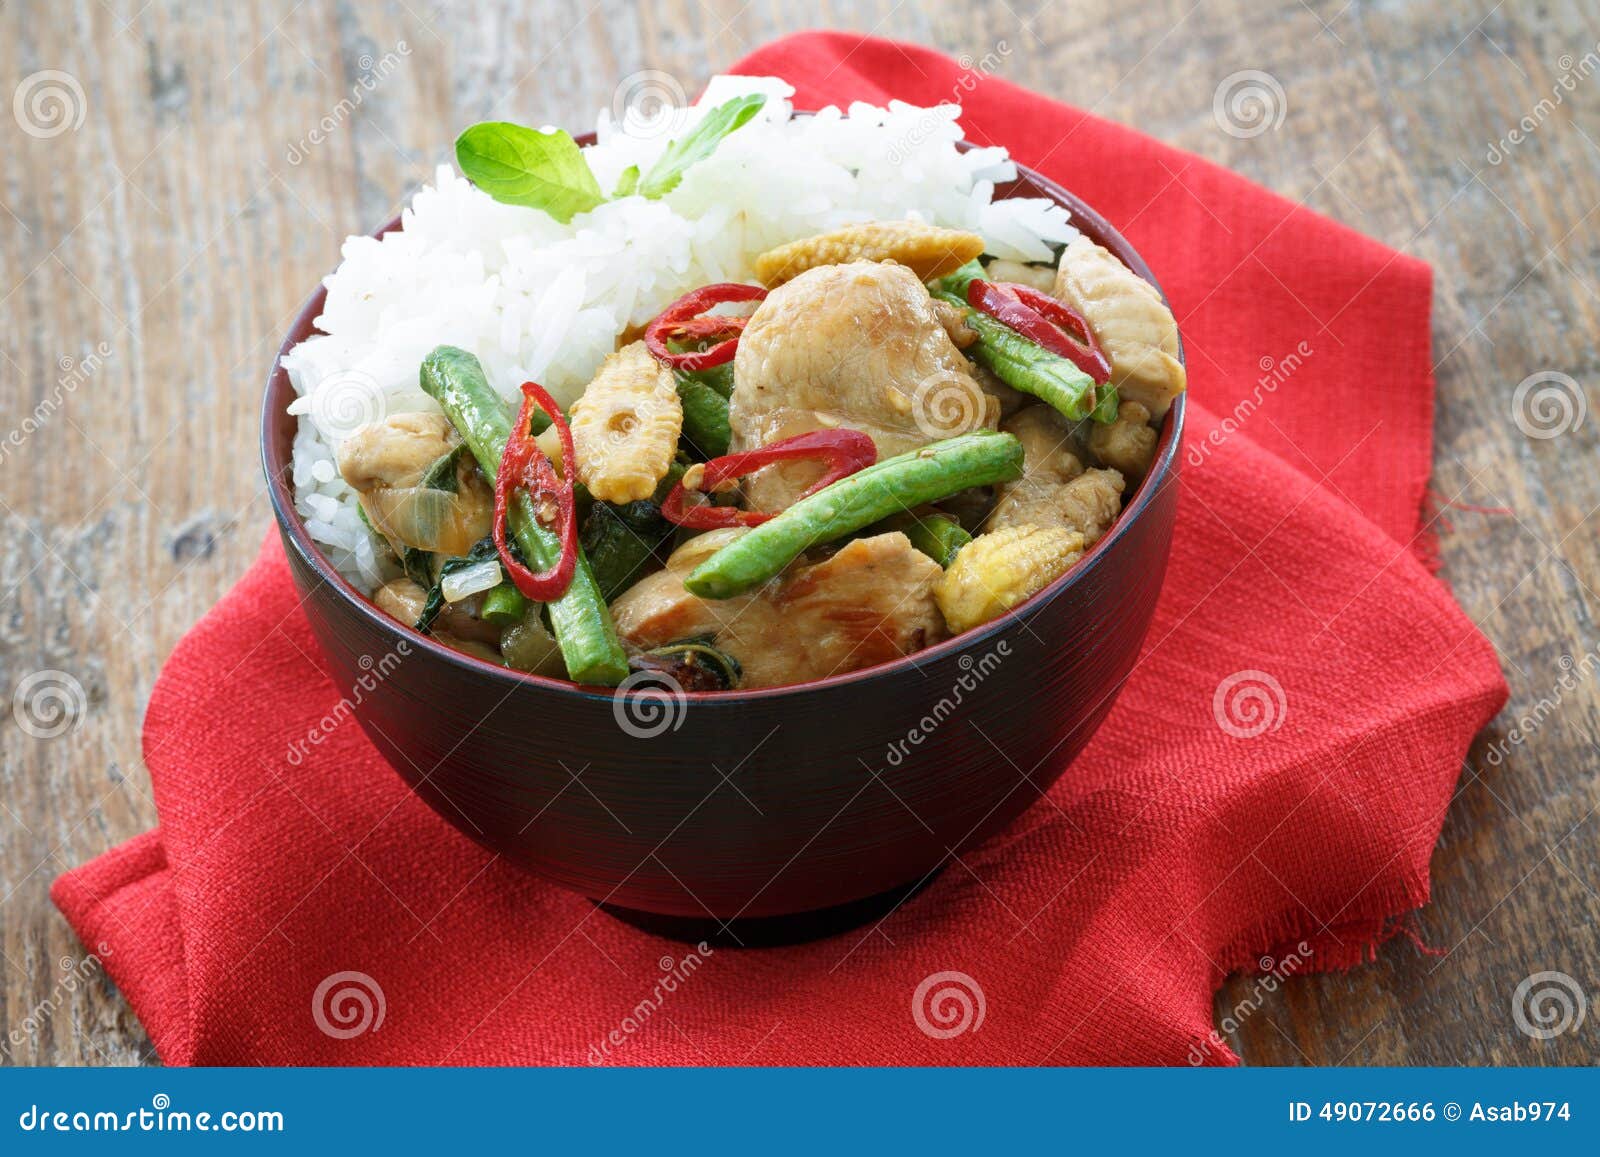 gai pad kra paw with rice , thailand food